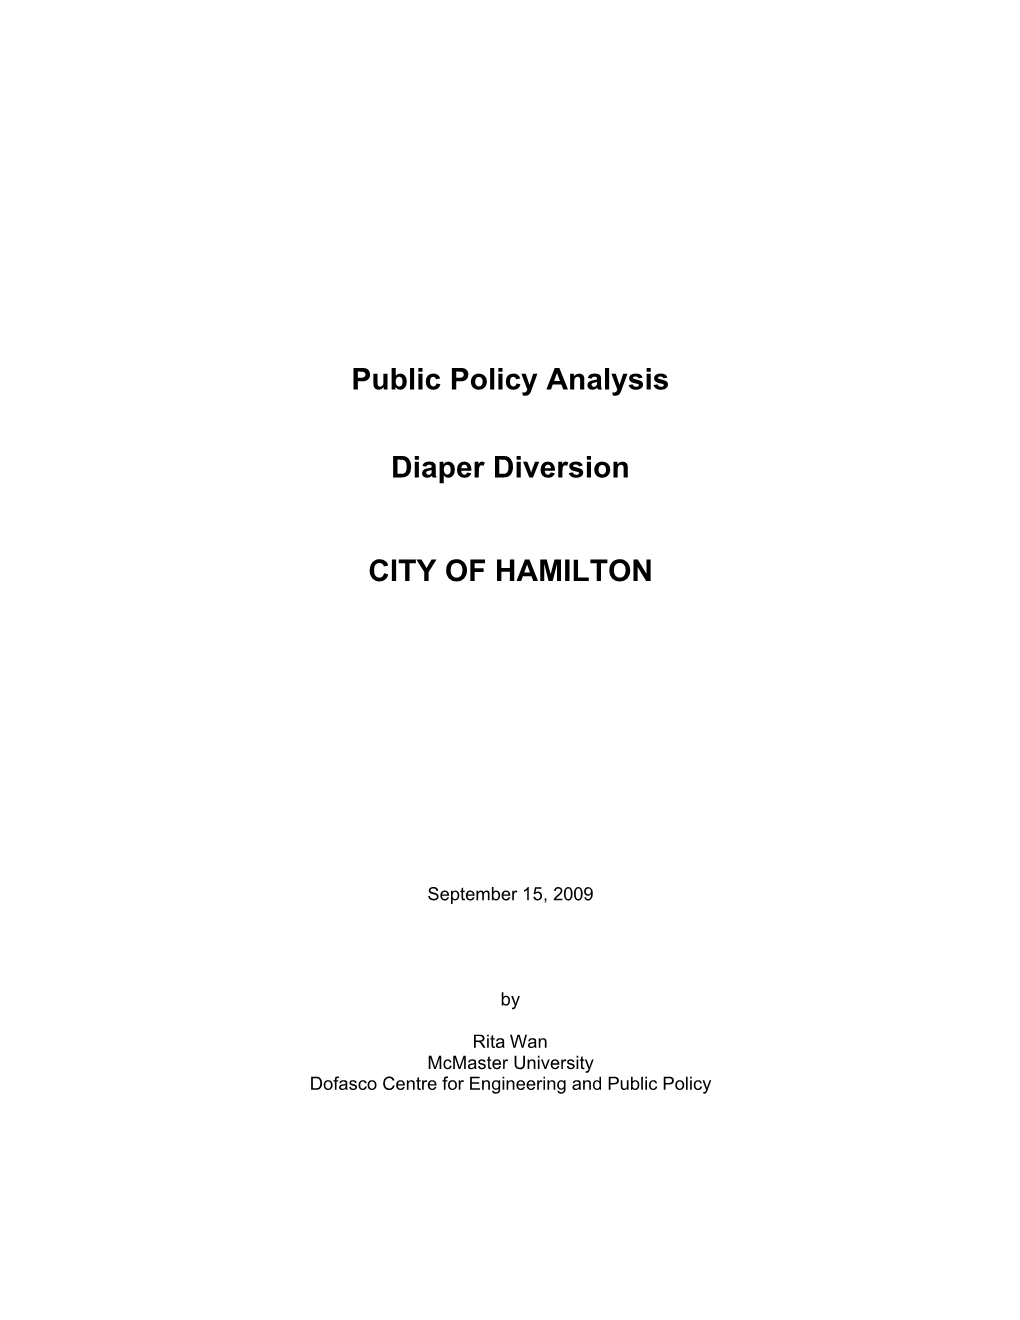 Public Policy Analysis Diaper Diversion City of Hamilton